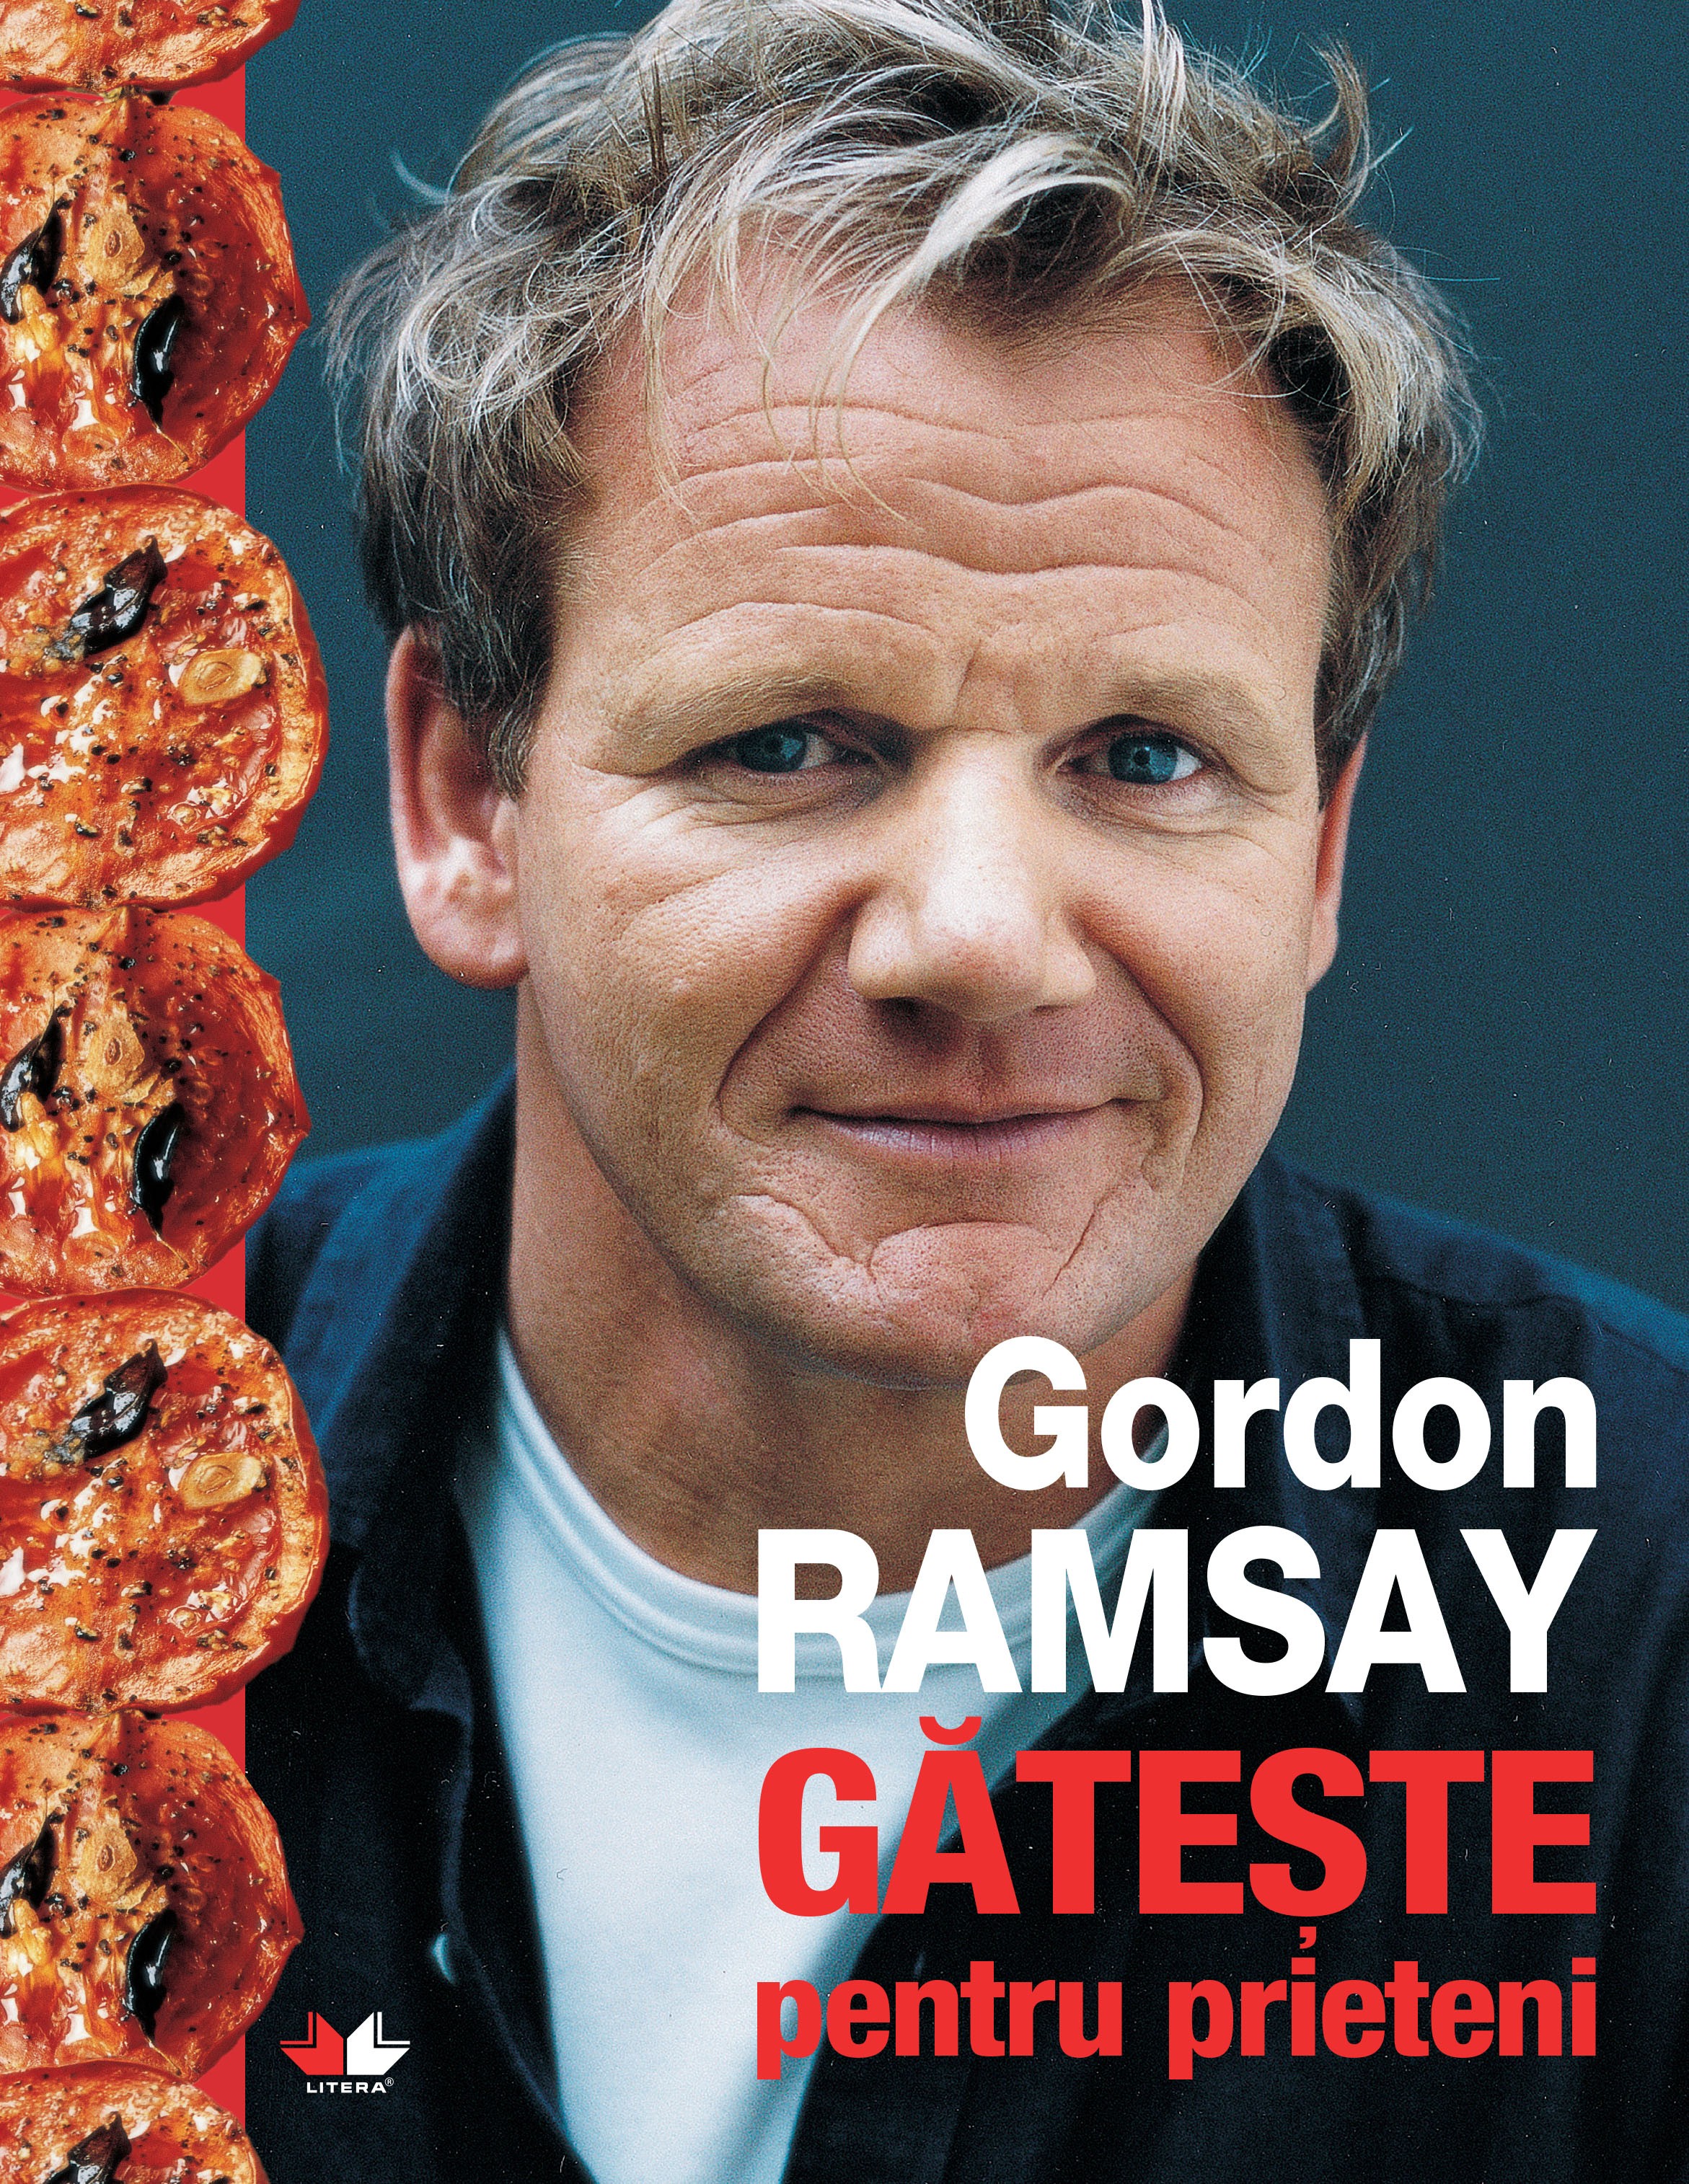 Gordon Ramsay gateste pentru prieteni - Gordon Ramsay